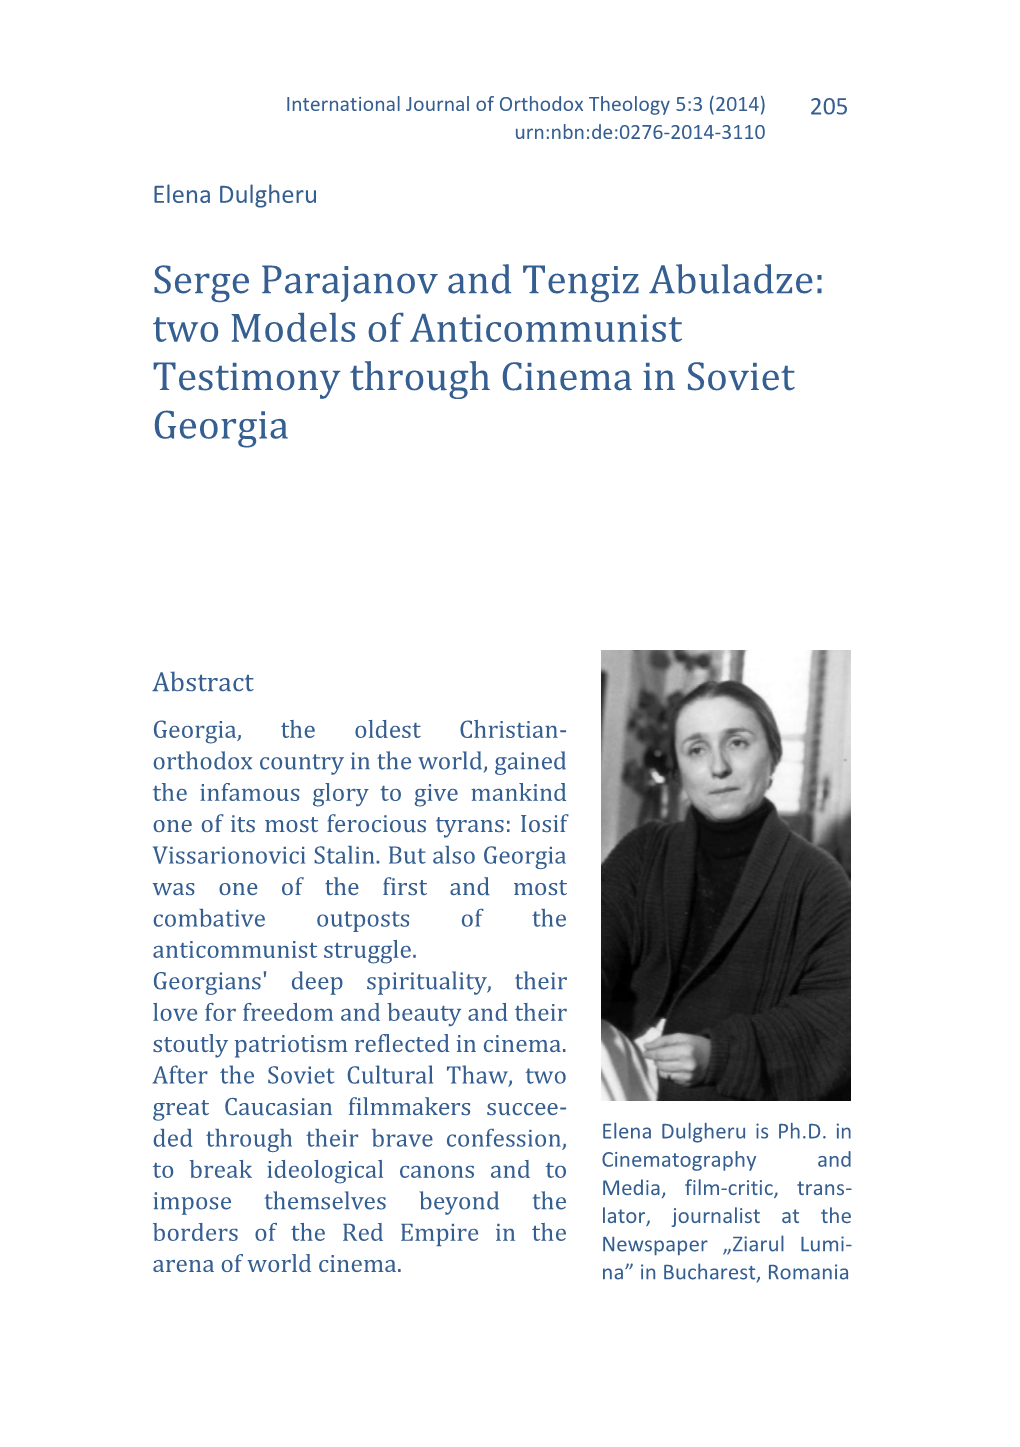 Serge Parajanov and Tengiz Abuladze: Two Models of Anticommunist Testimony Through Cinema in Soviet Georgia